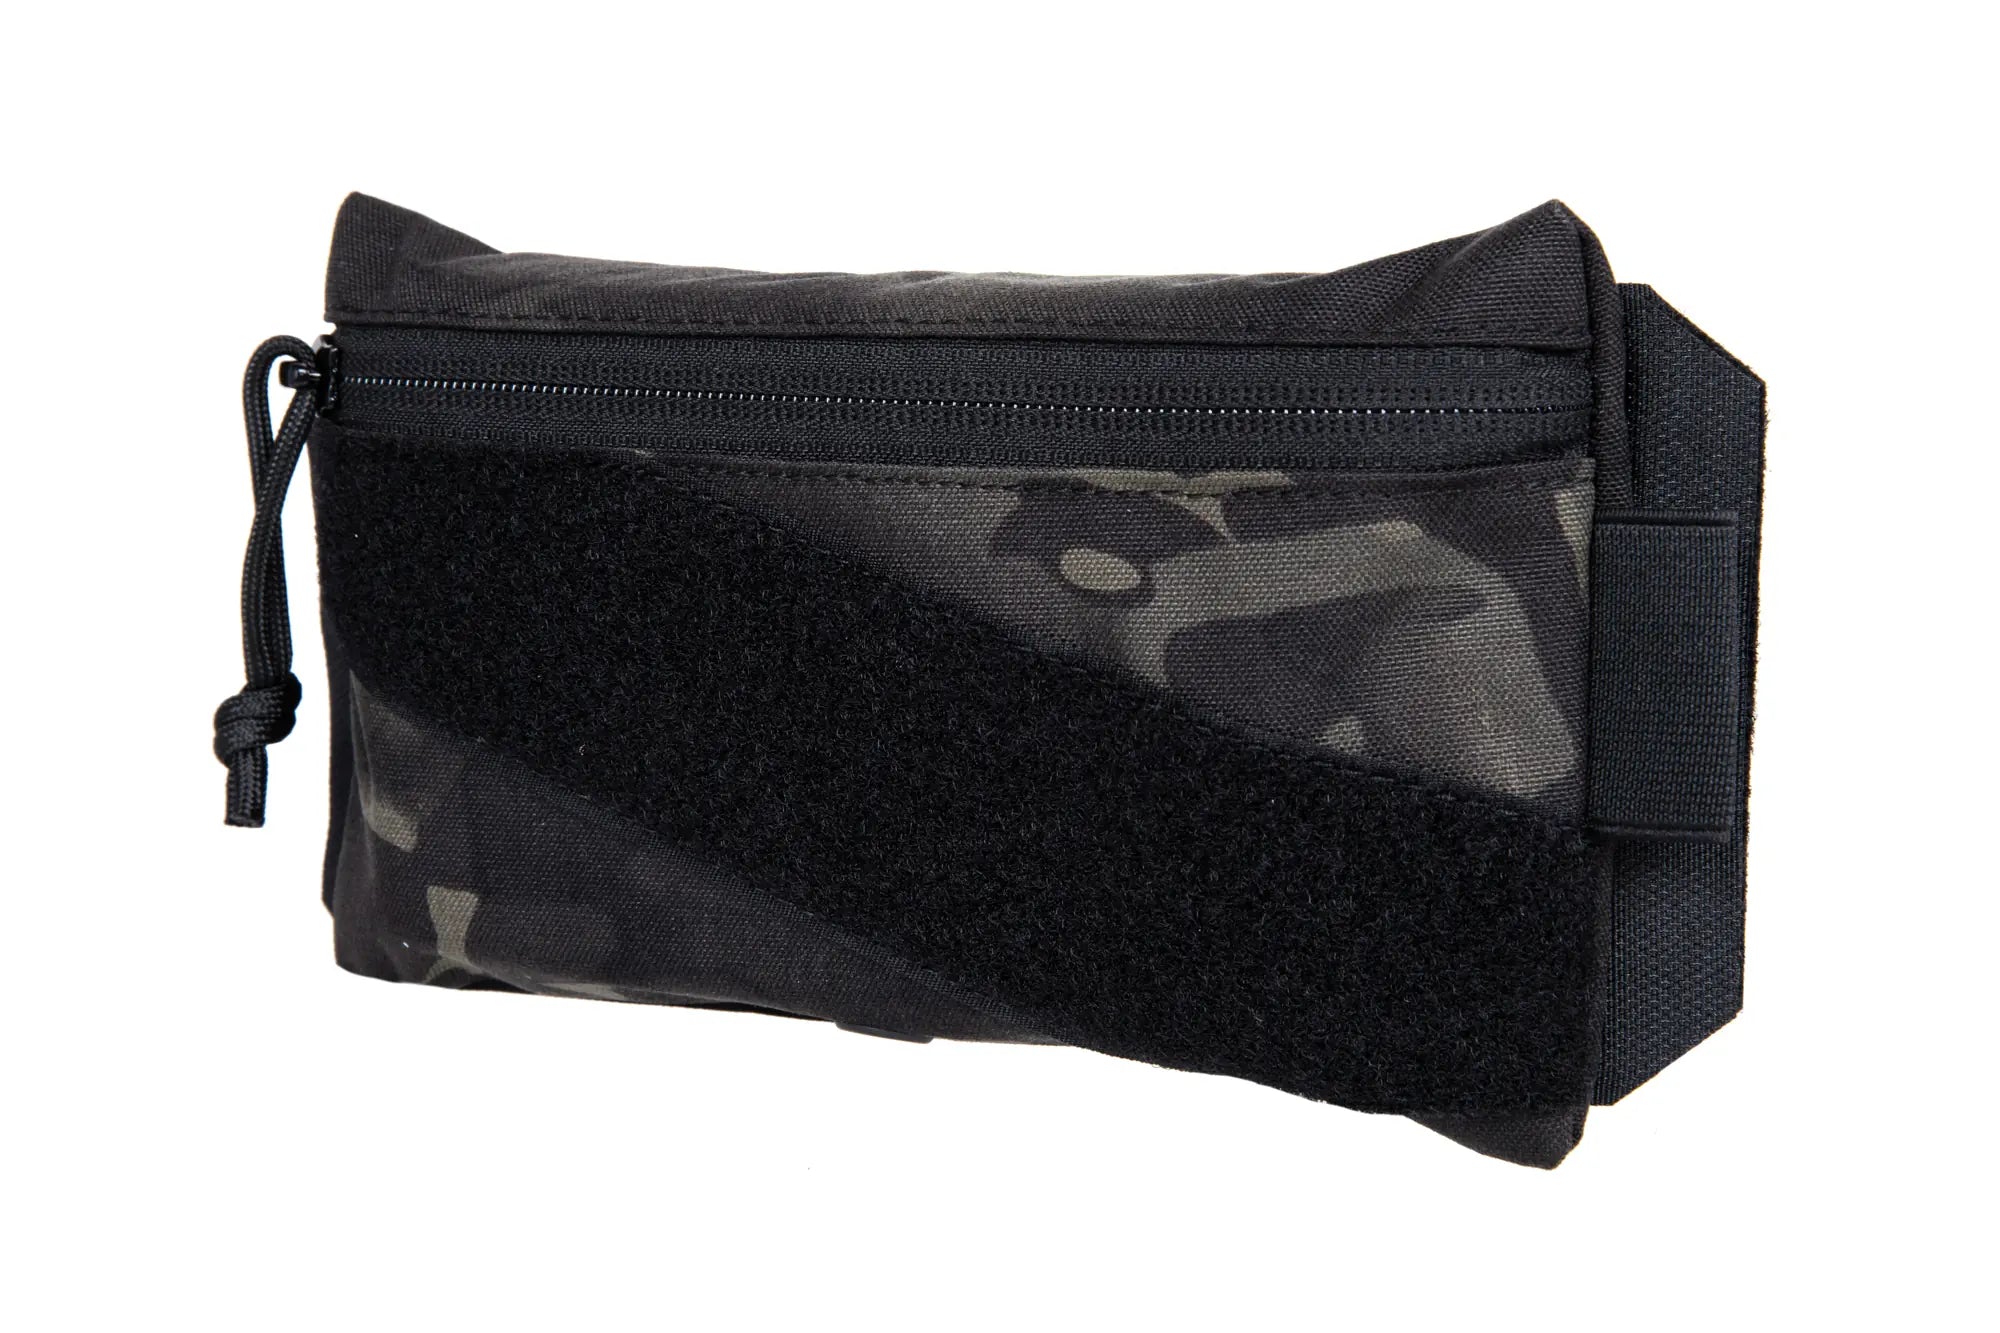 Primal Gear AC-01 Candy Bag Multicam Black universal pocket-1